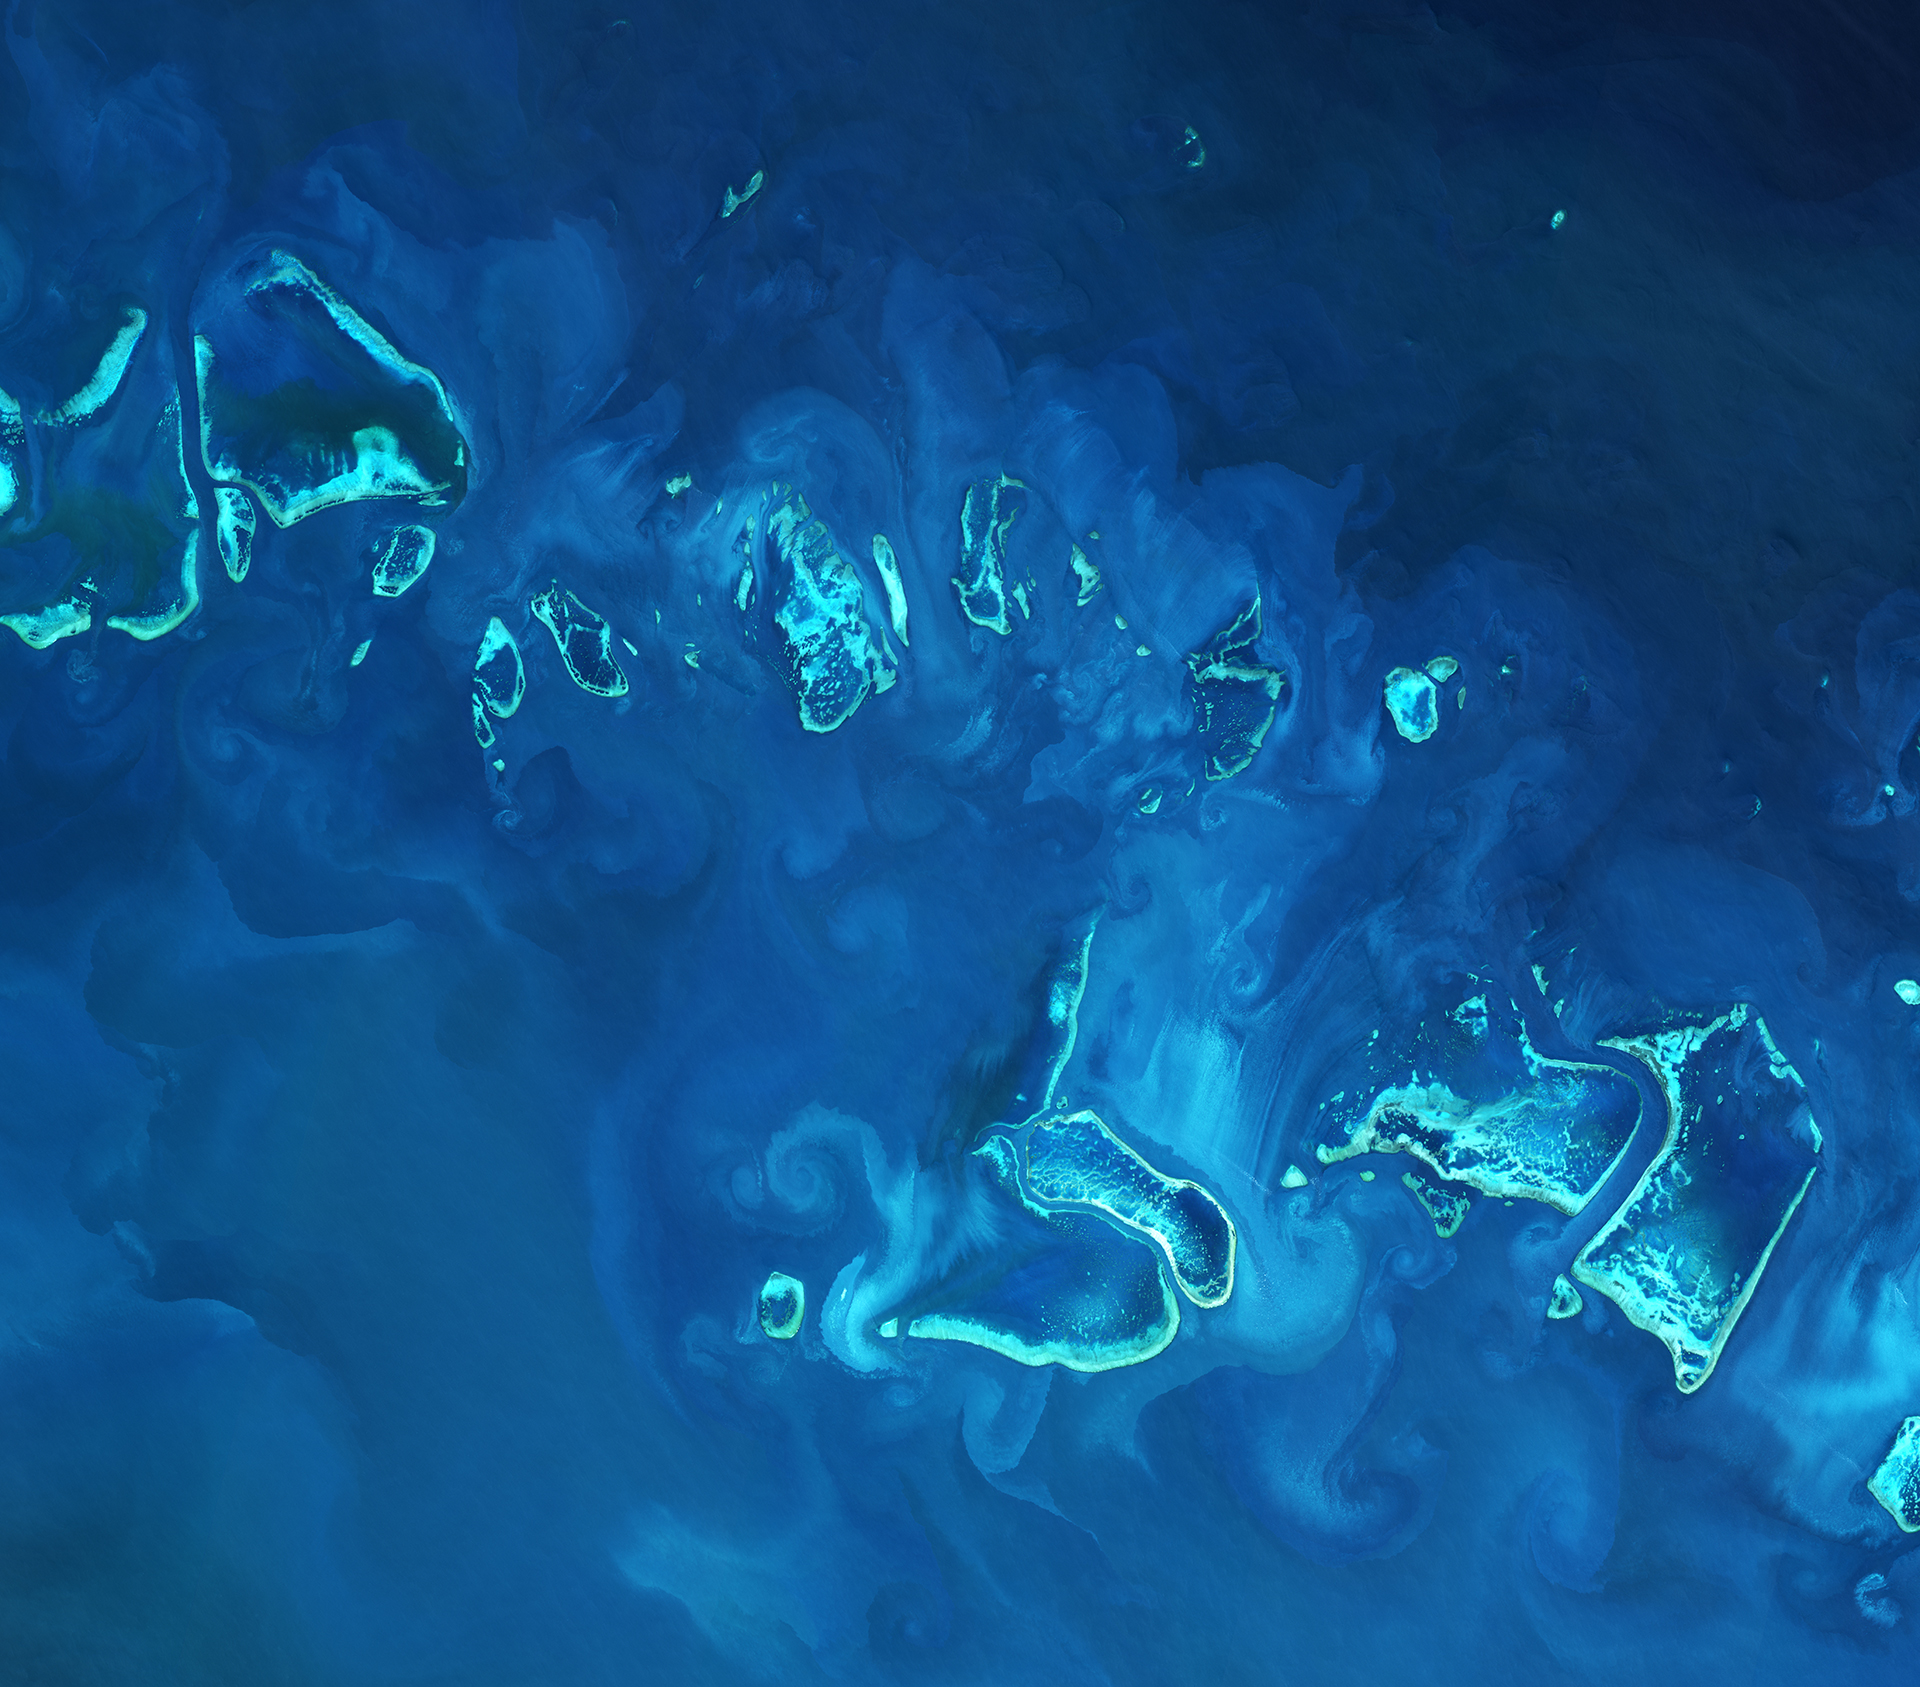 Снимок Большого Барьерного рифа из космоса. Фото © Flickr / European Space Agency